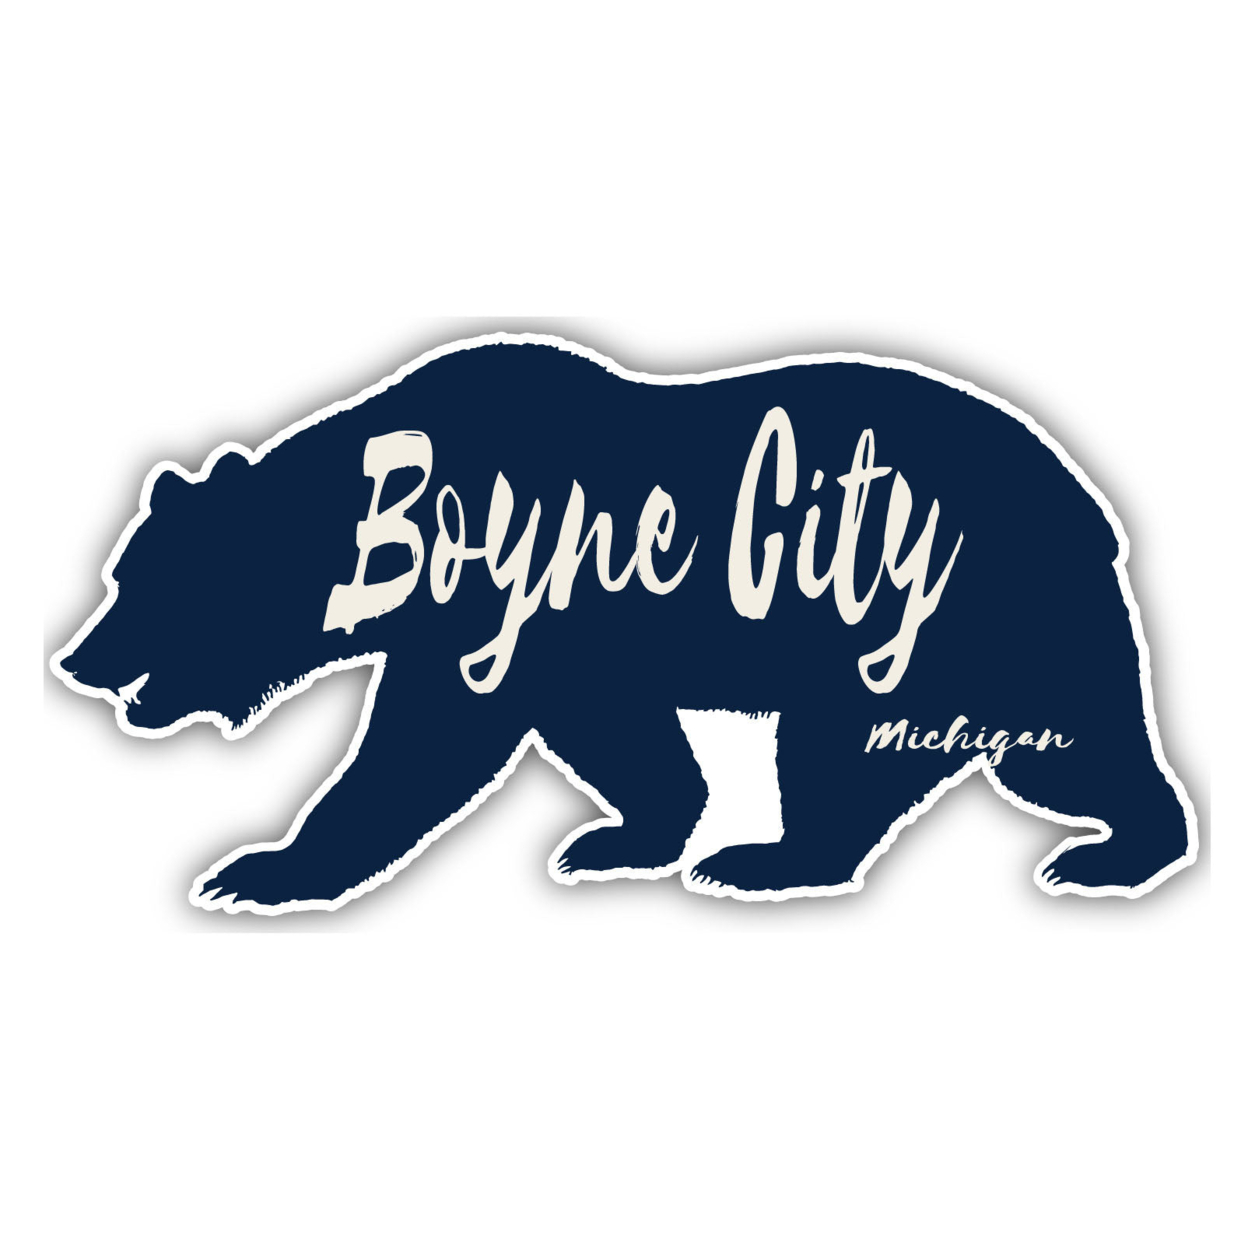 Boyne City Michigan Souvenir Decorative Stickers (Choose Theme And Size) - 4-Pack, 4-Inch, Tent